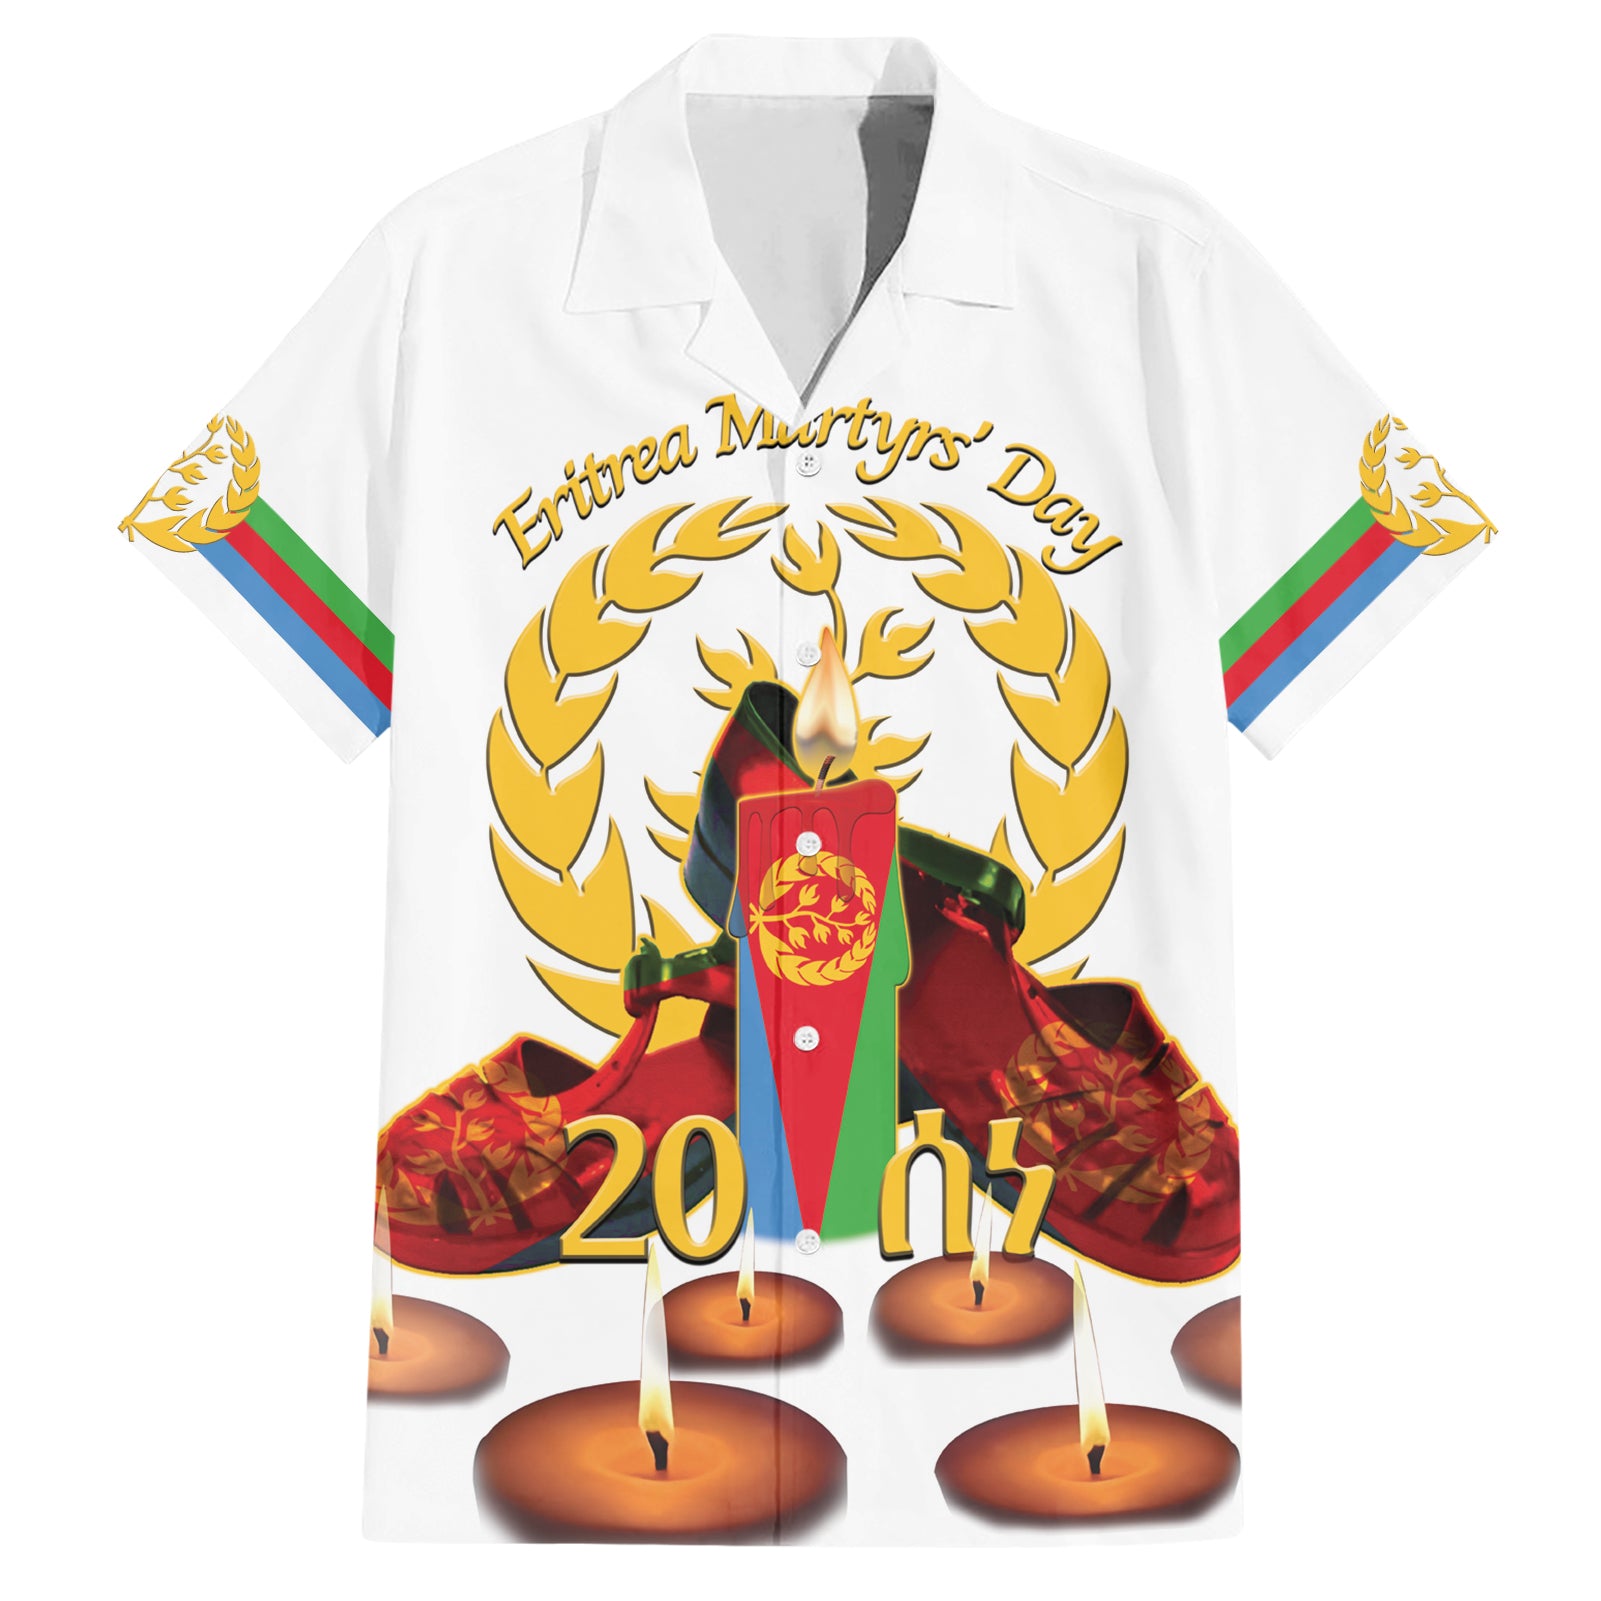 Custom Eritrea Martyrs' Day Hawaiian Shirt 20 June Shida Shoes With Candles - White